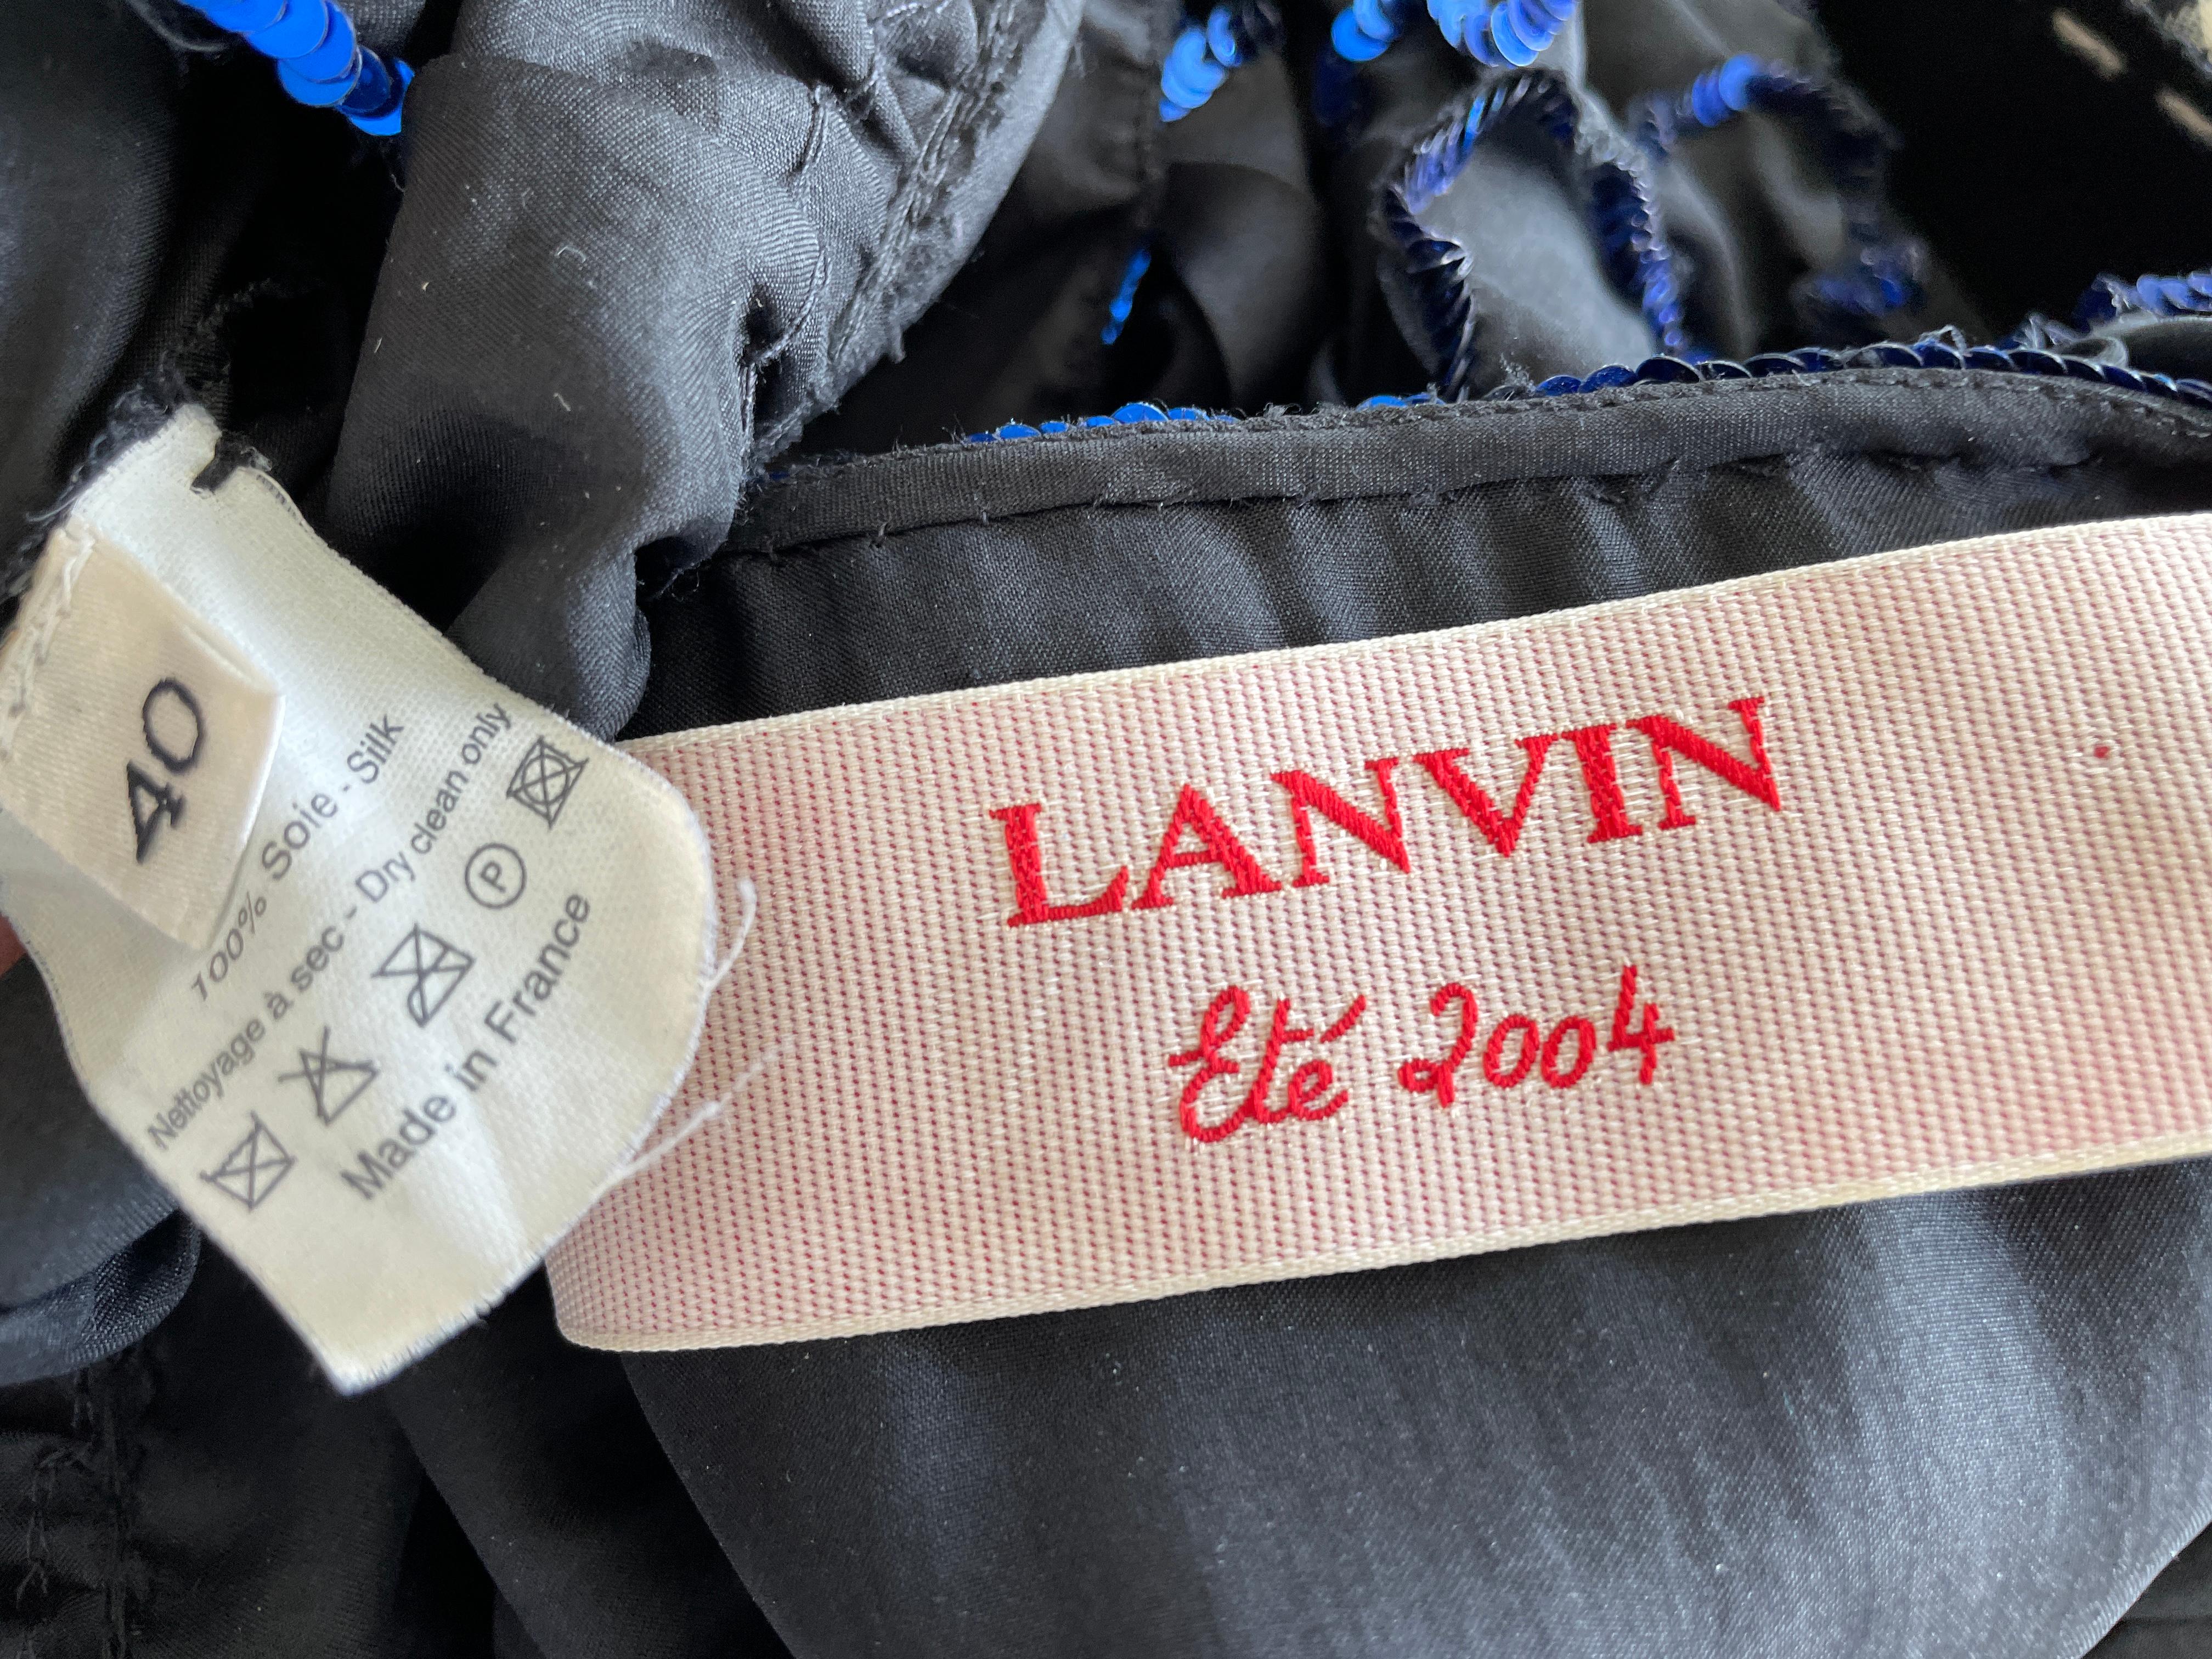 Lanvin by Alber Elbaz Ete 2004 Black Ruffle Cocktail Dress with Blue Sequin Trim For Sale 7